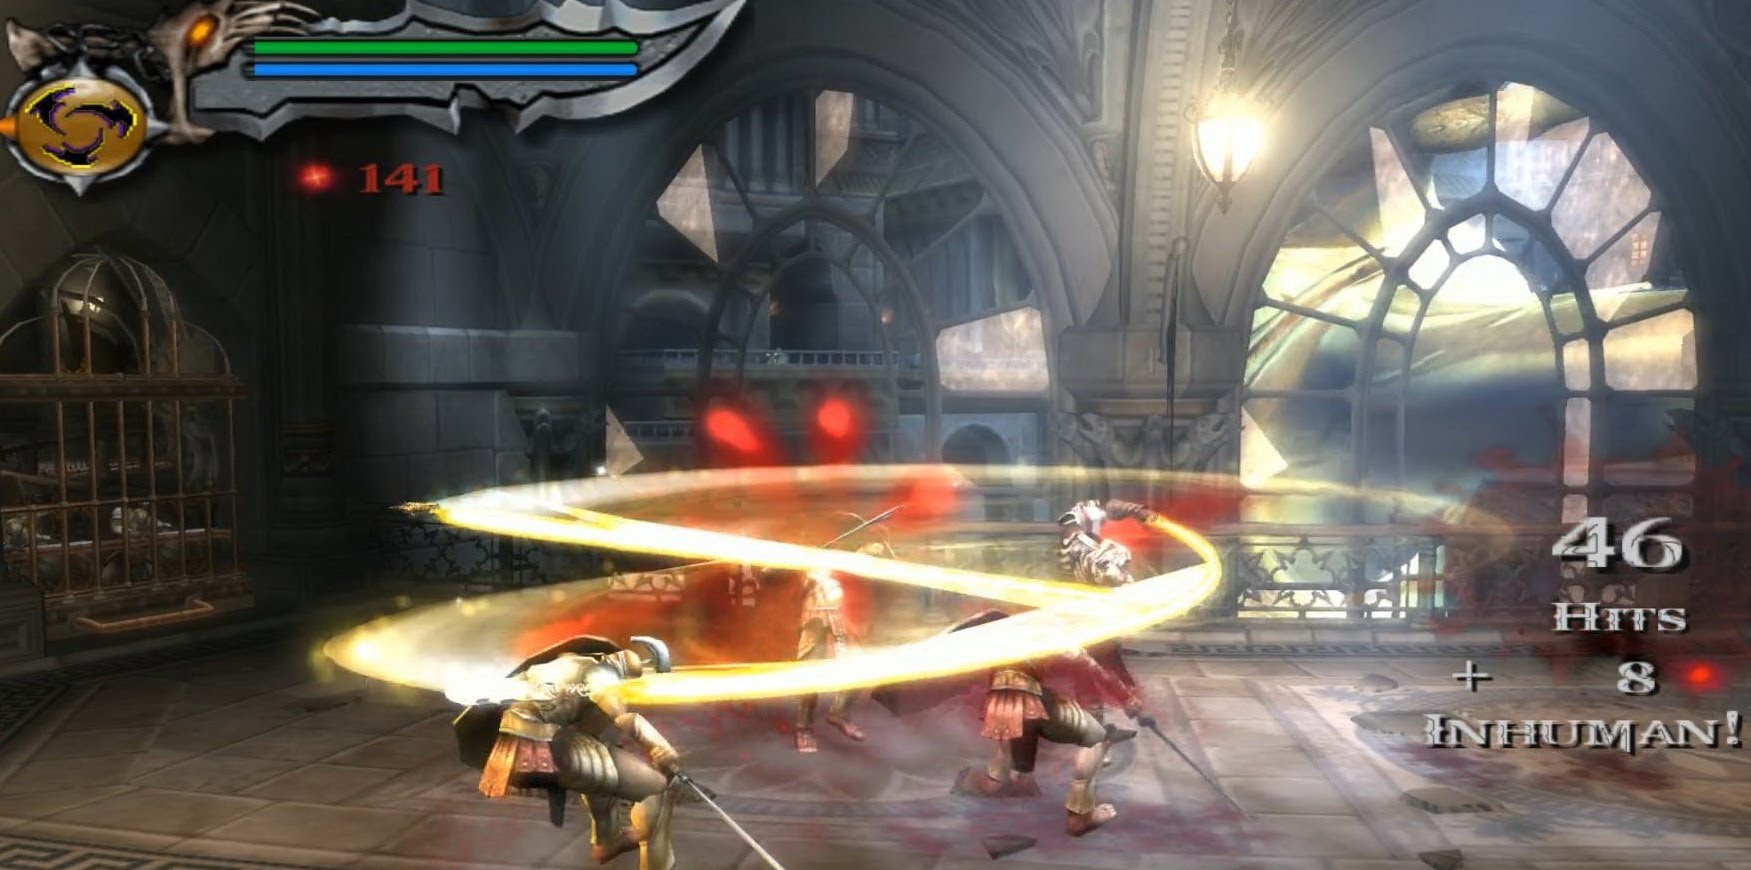 God of War - PS2 Gameplay 1080p (PCSX2) 